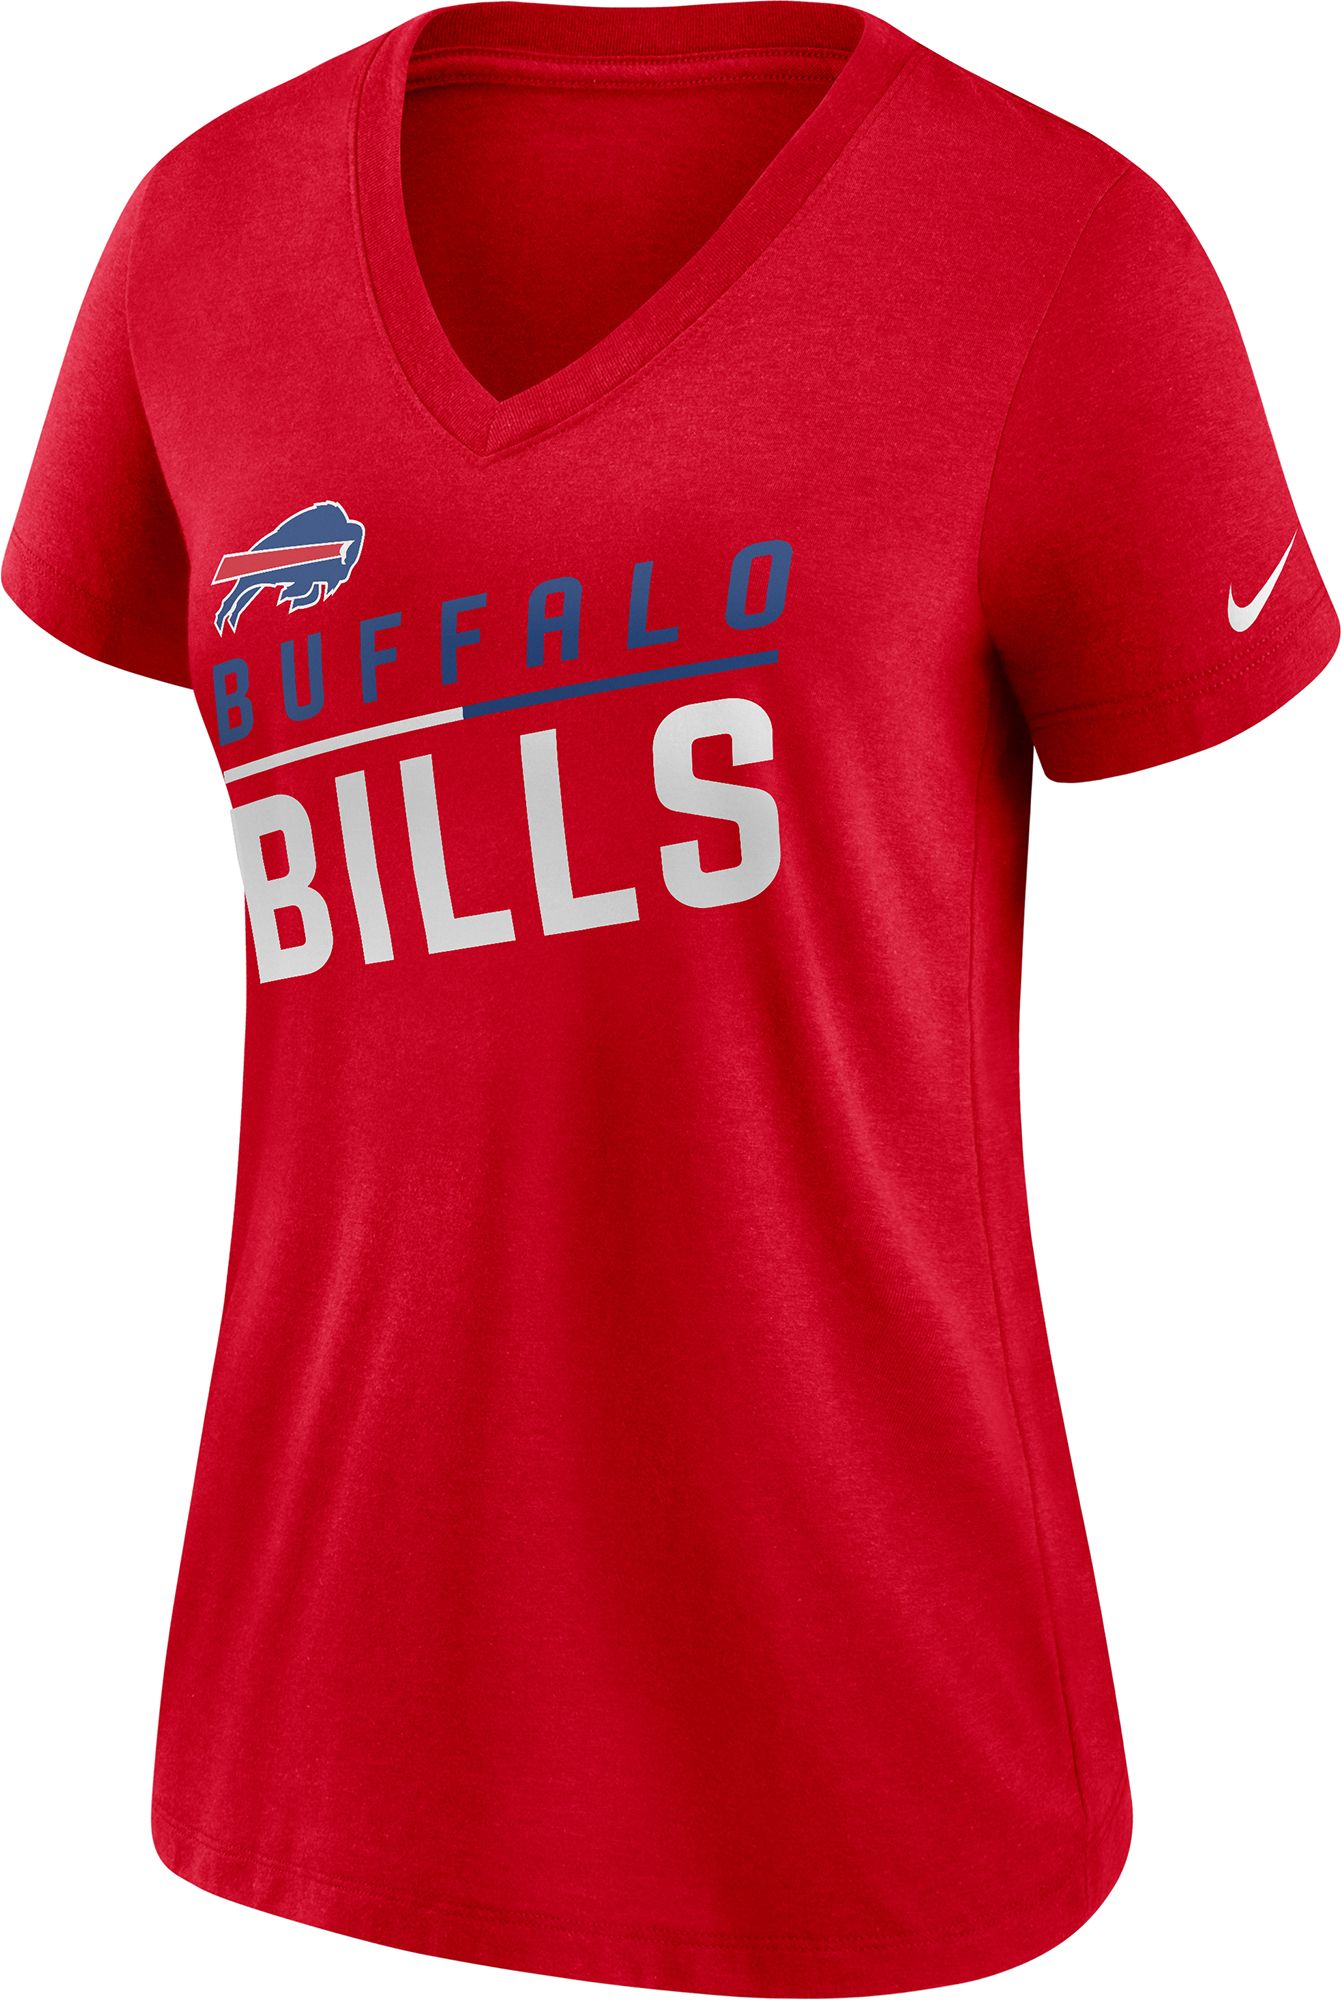 Women's Buffalo Bills Slant Red V-Neck T-Shirt